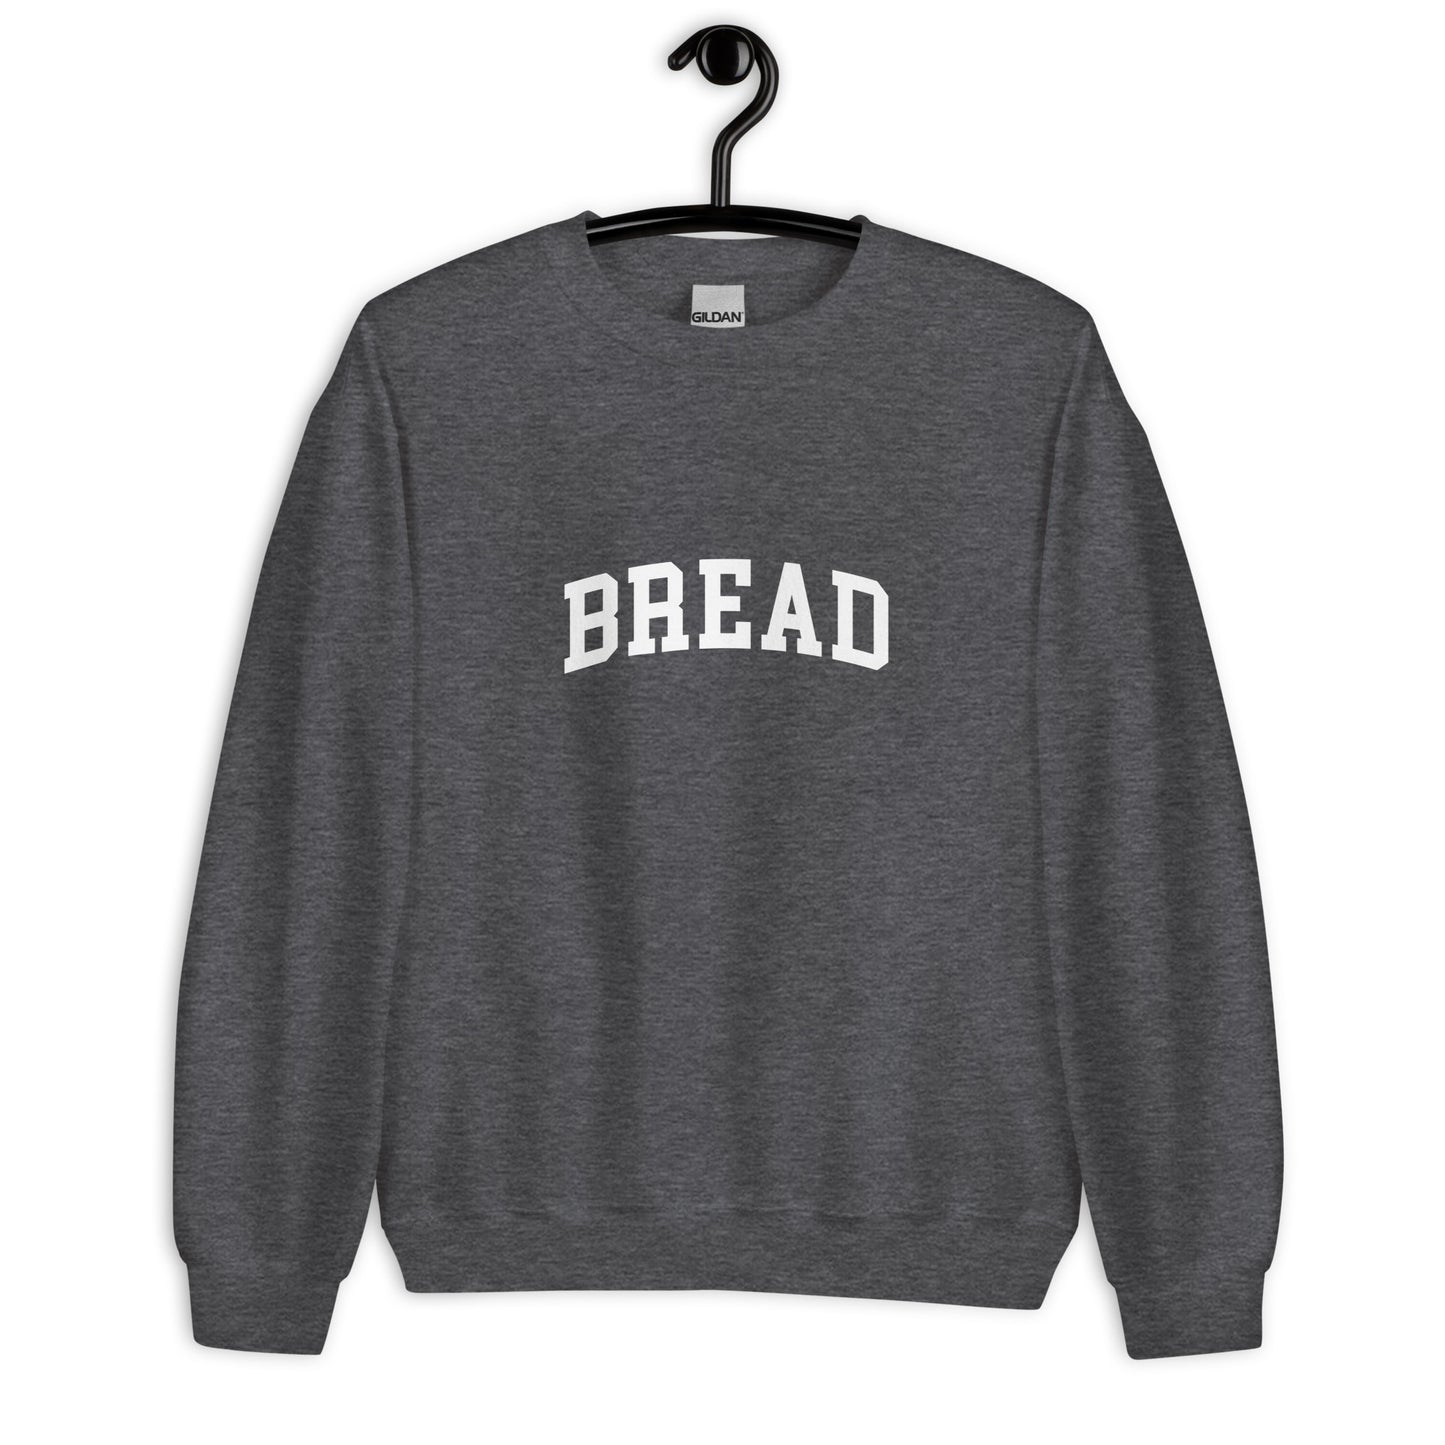 Bread Sweatshirt - Arched Font